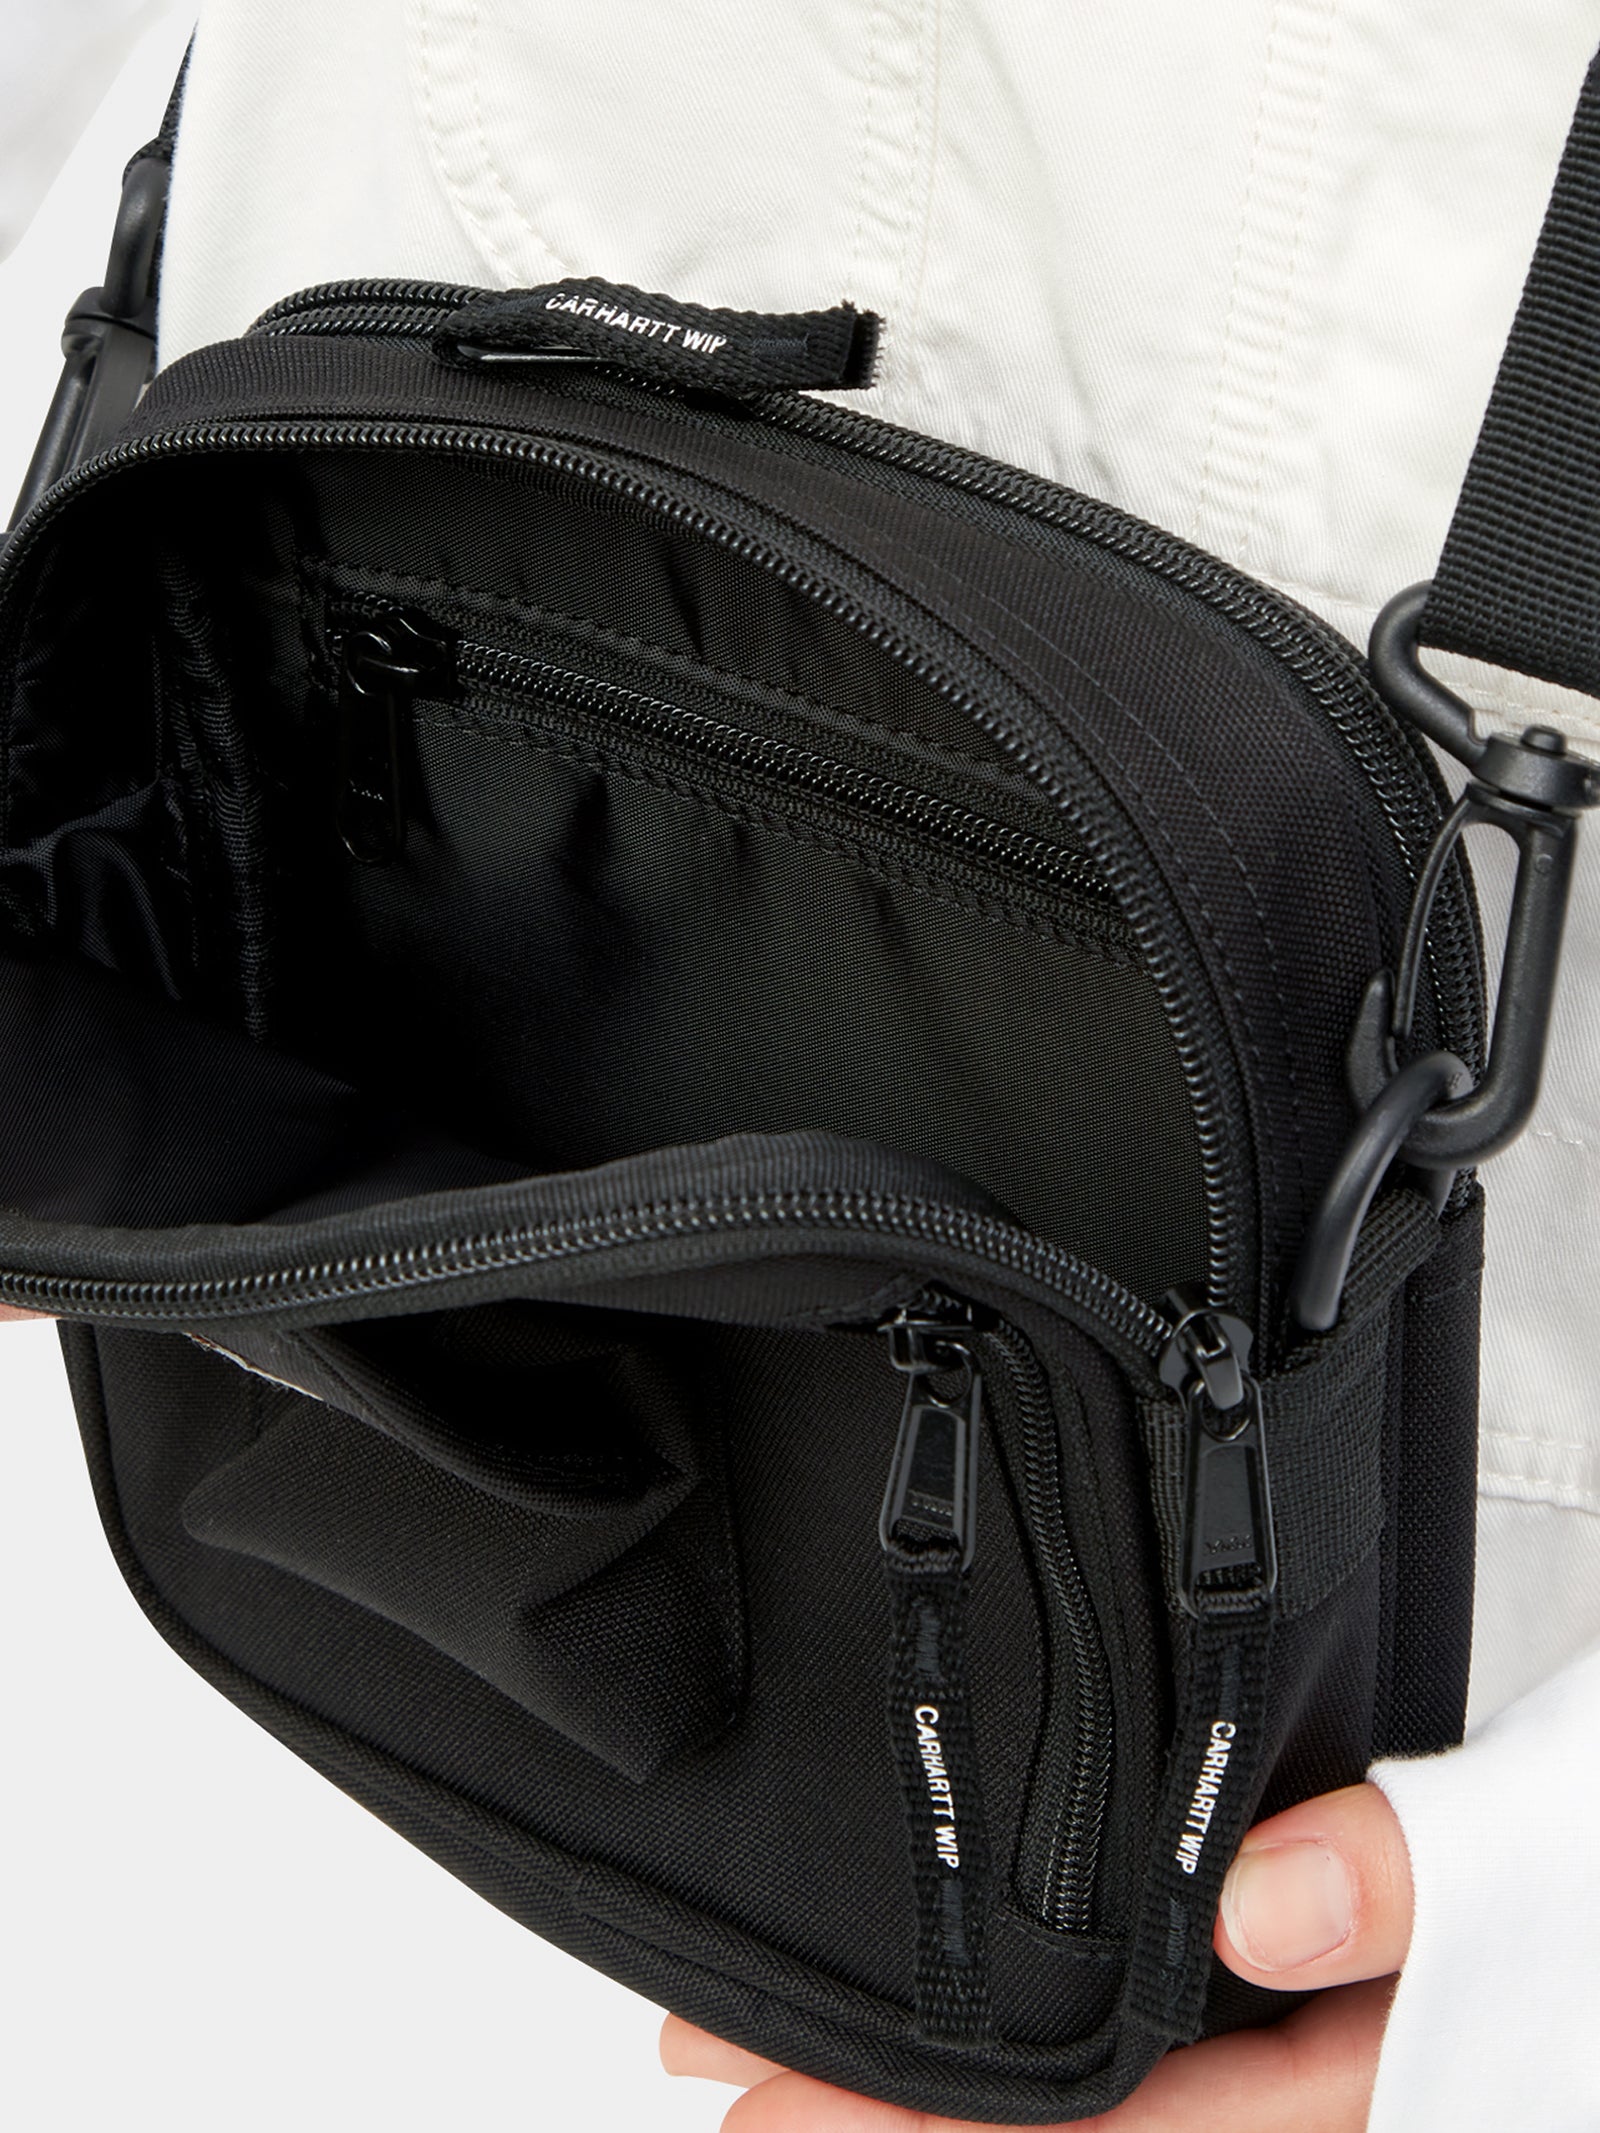 Essentials Small Cross Body Bag in Black